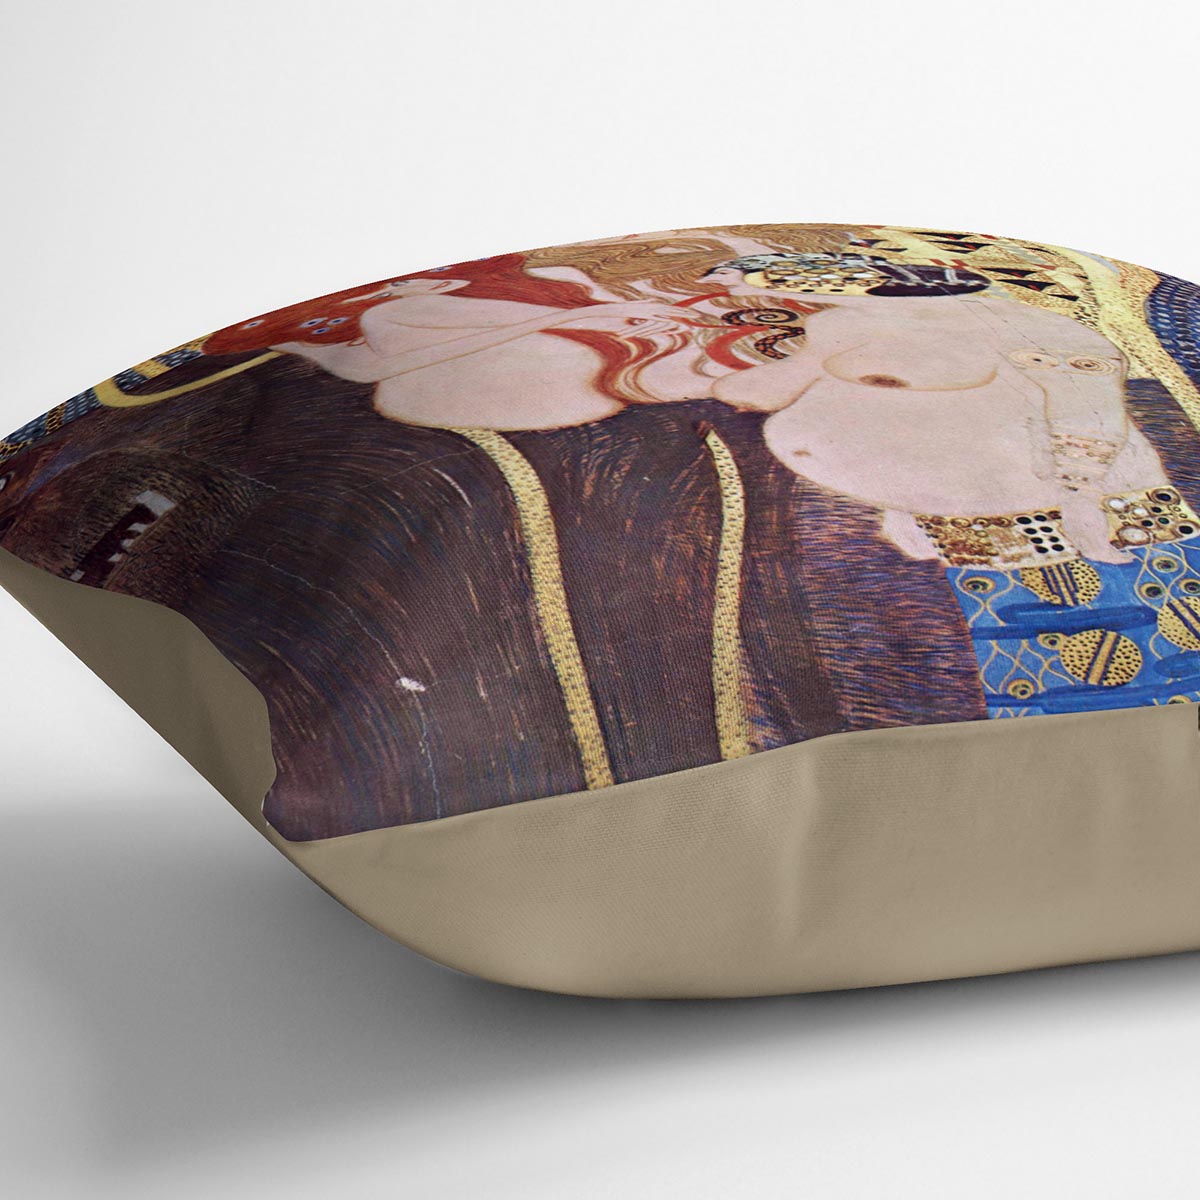 The Beethoven Freize 2 by Klimt Cushion